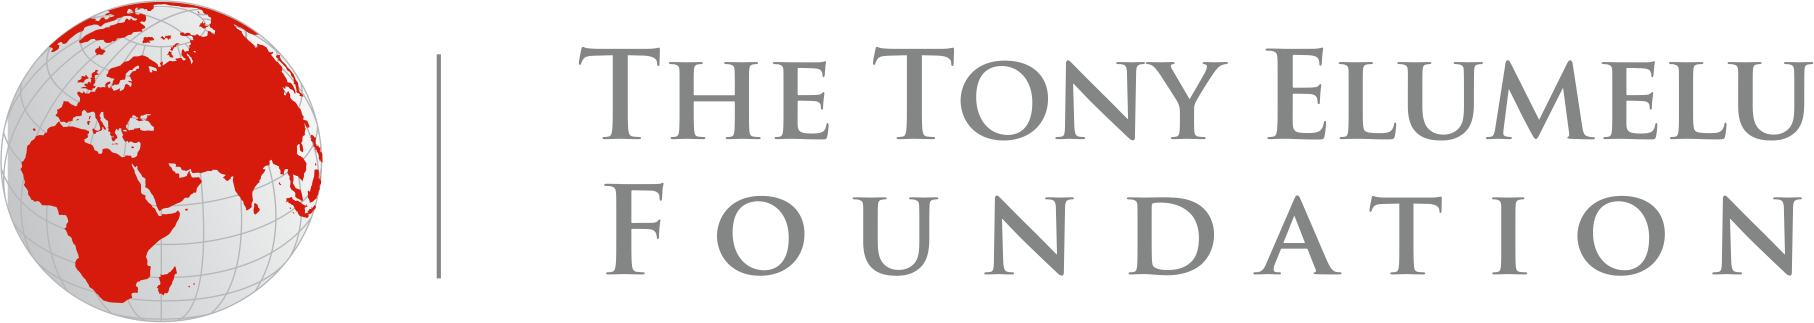 The Tony Elumelu Fondation